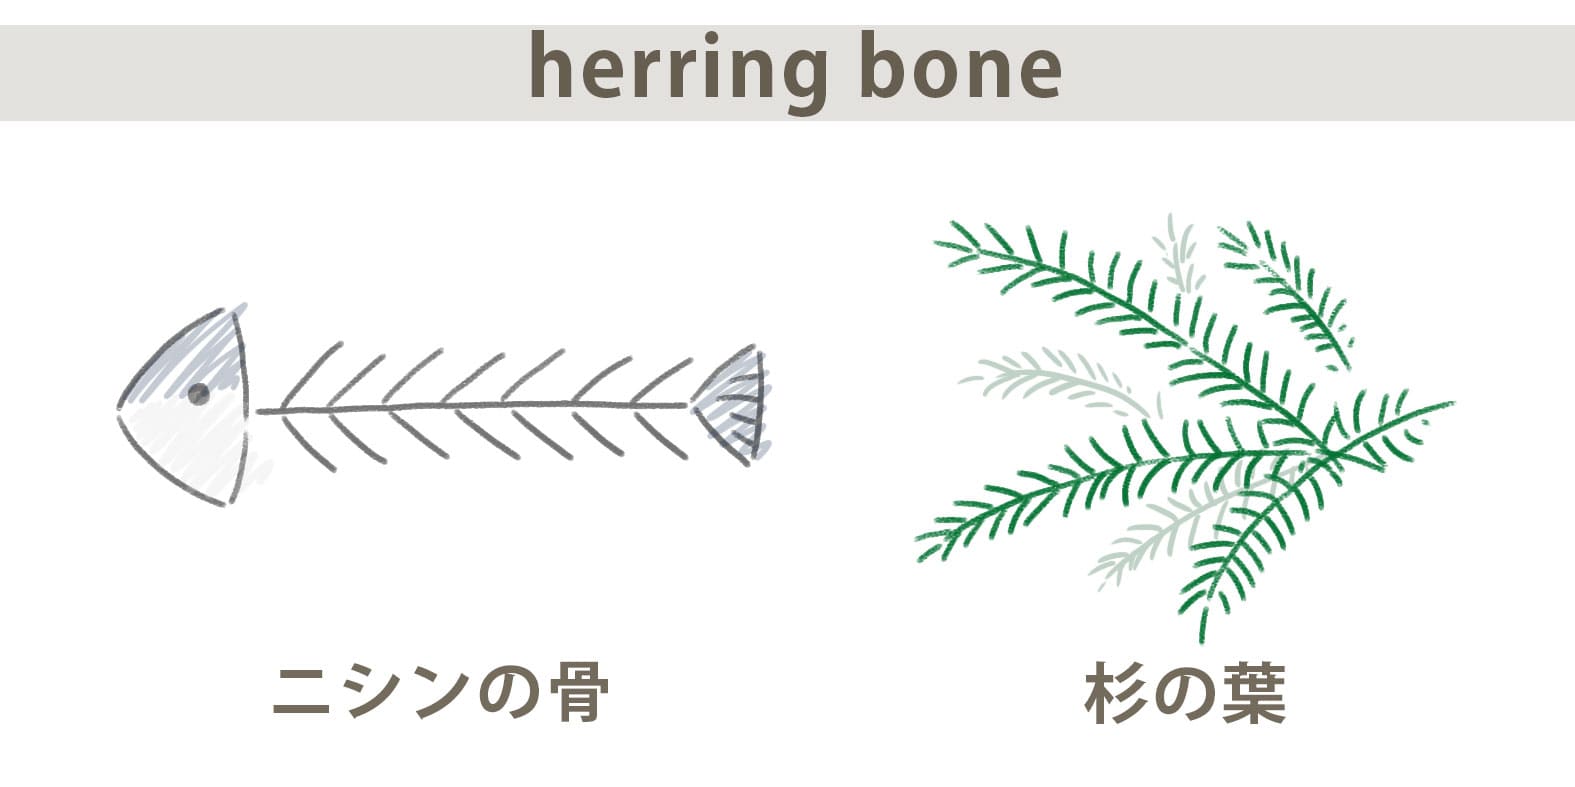 herring bone